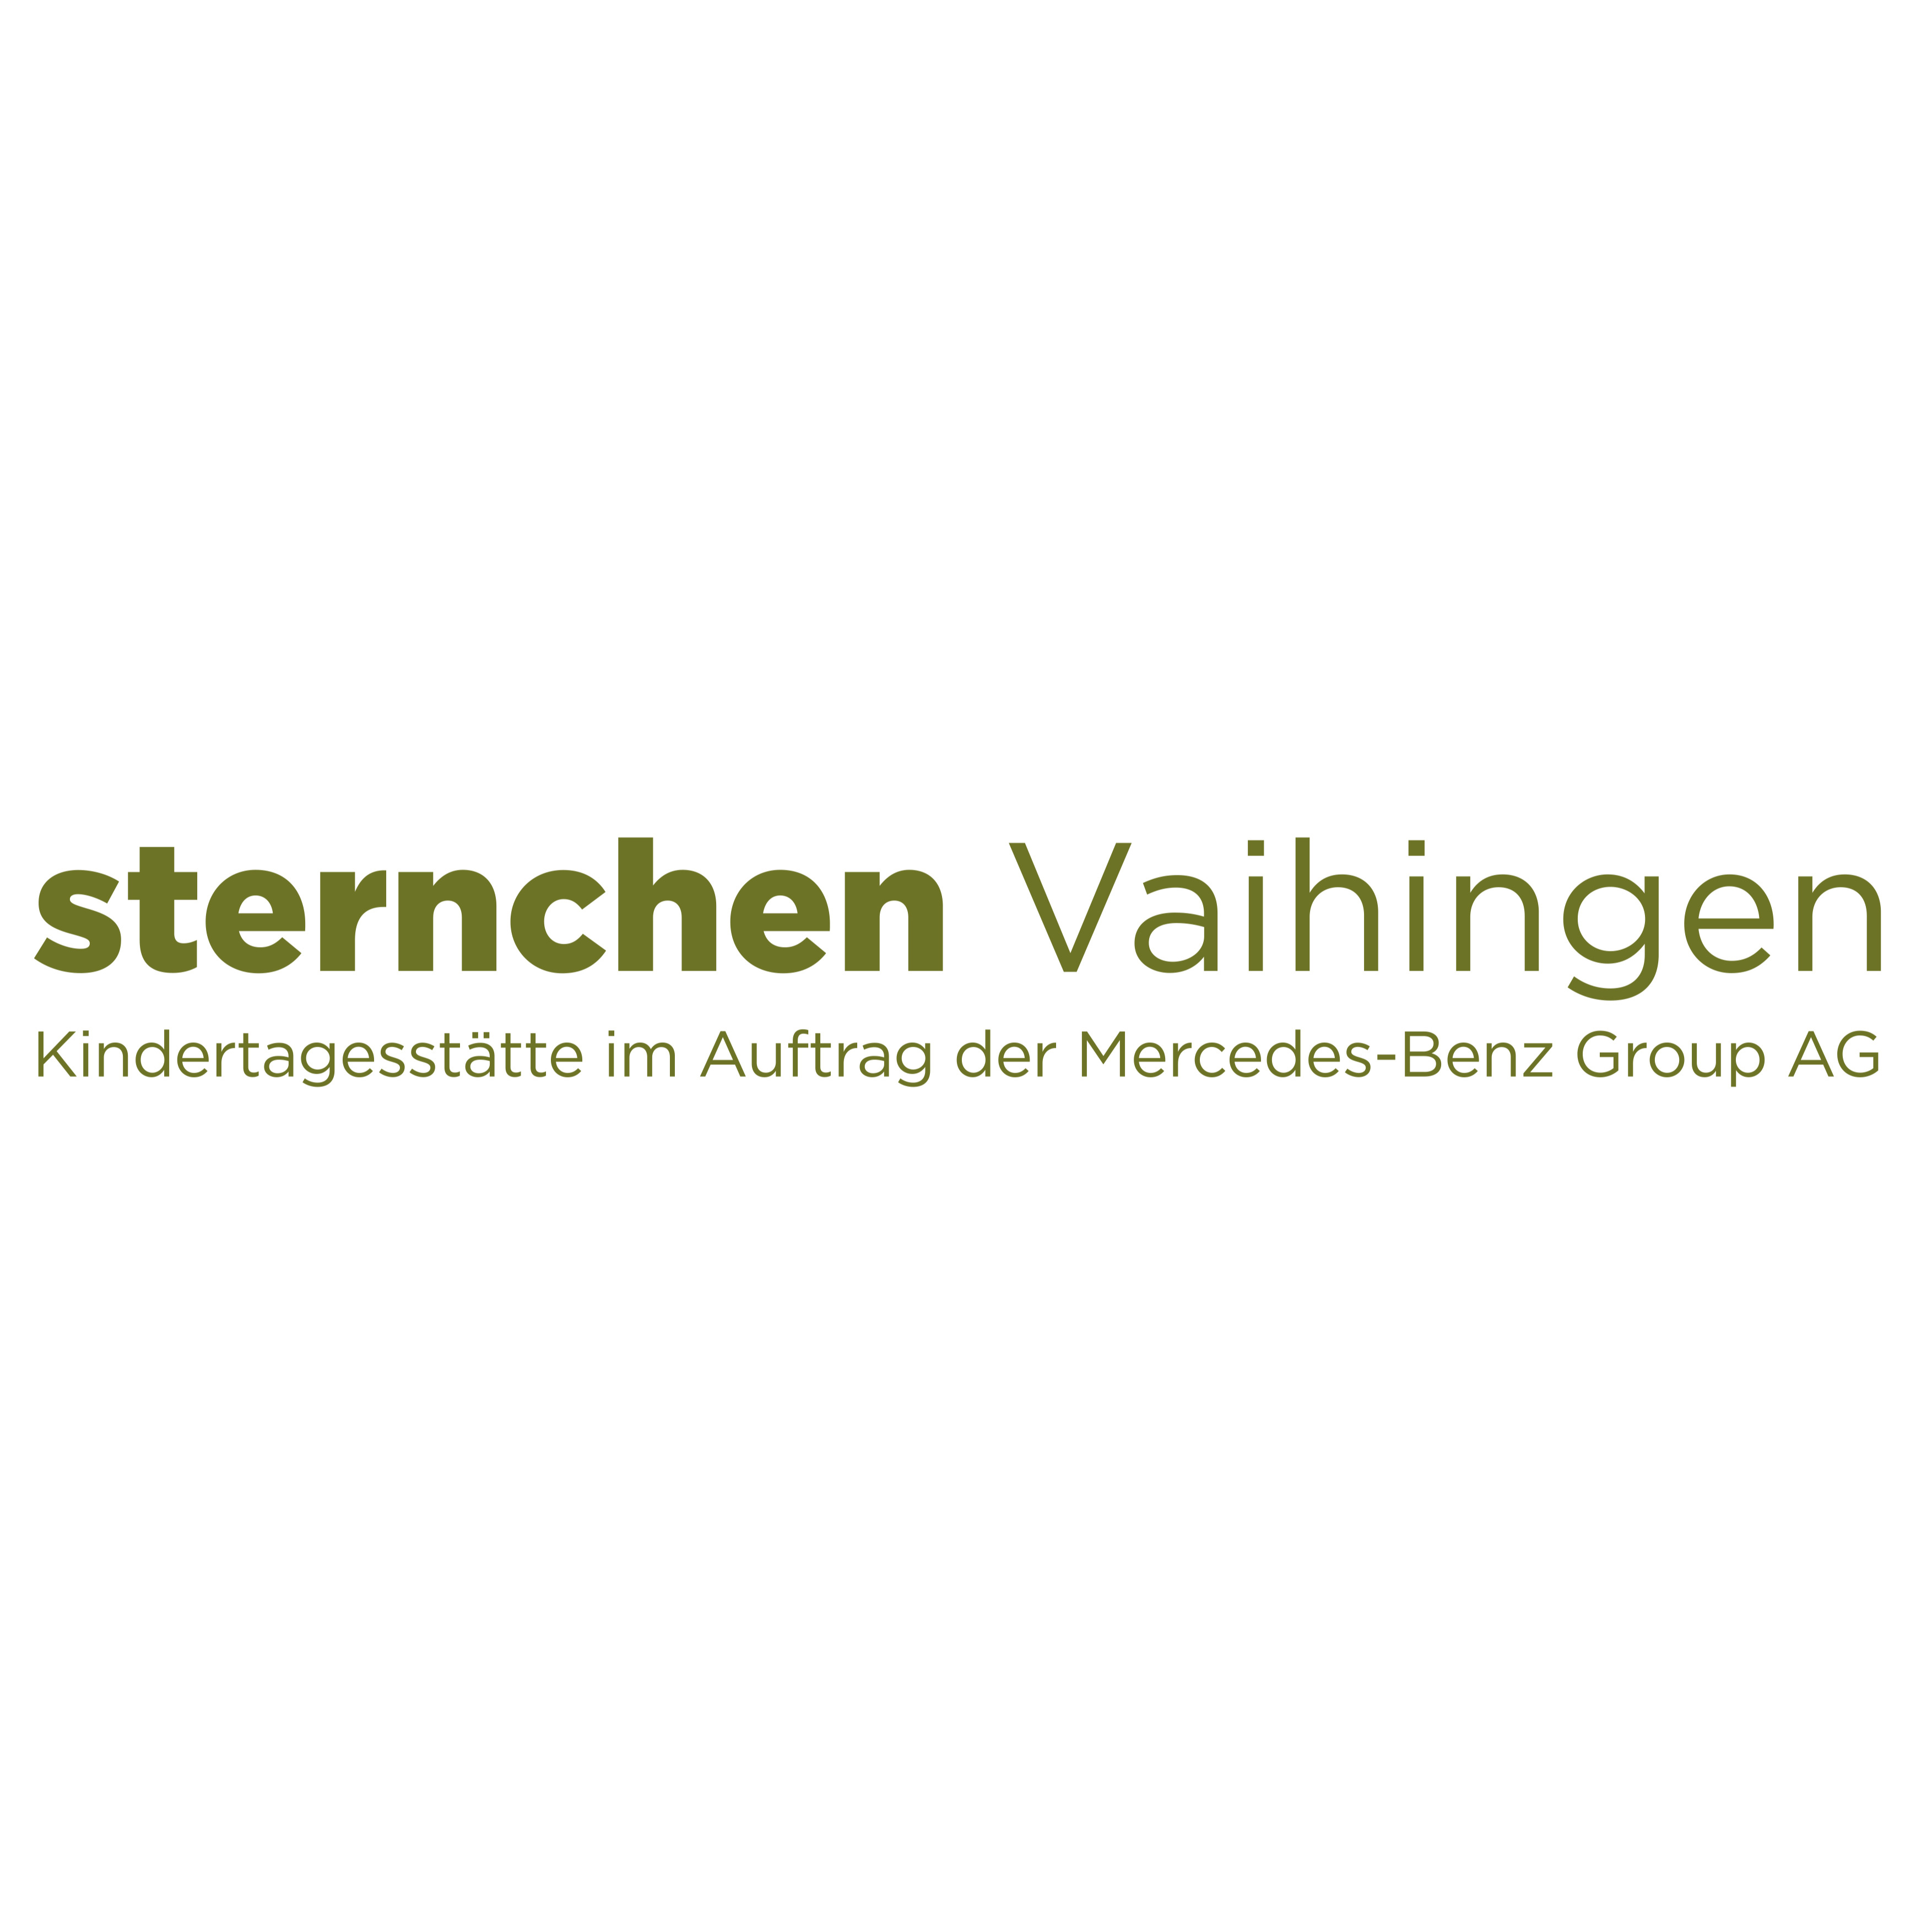 sternchen Vaihingen - pme Familienservice in Stuttgart - Logo